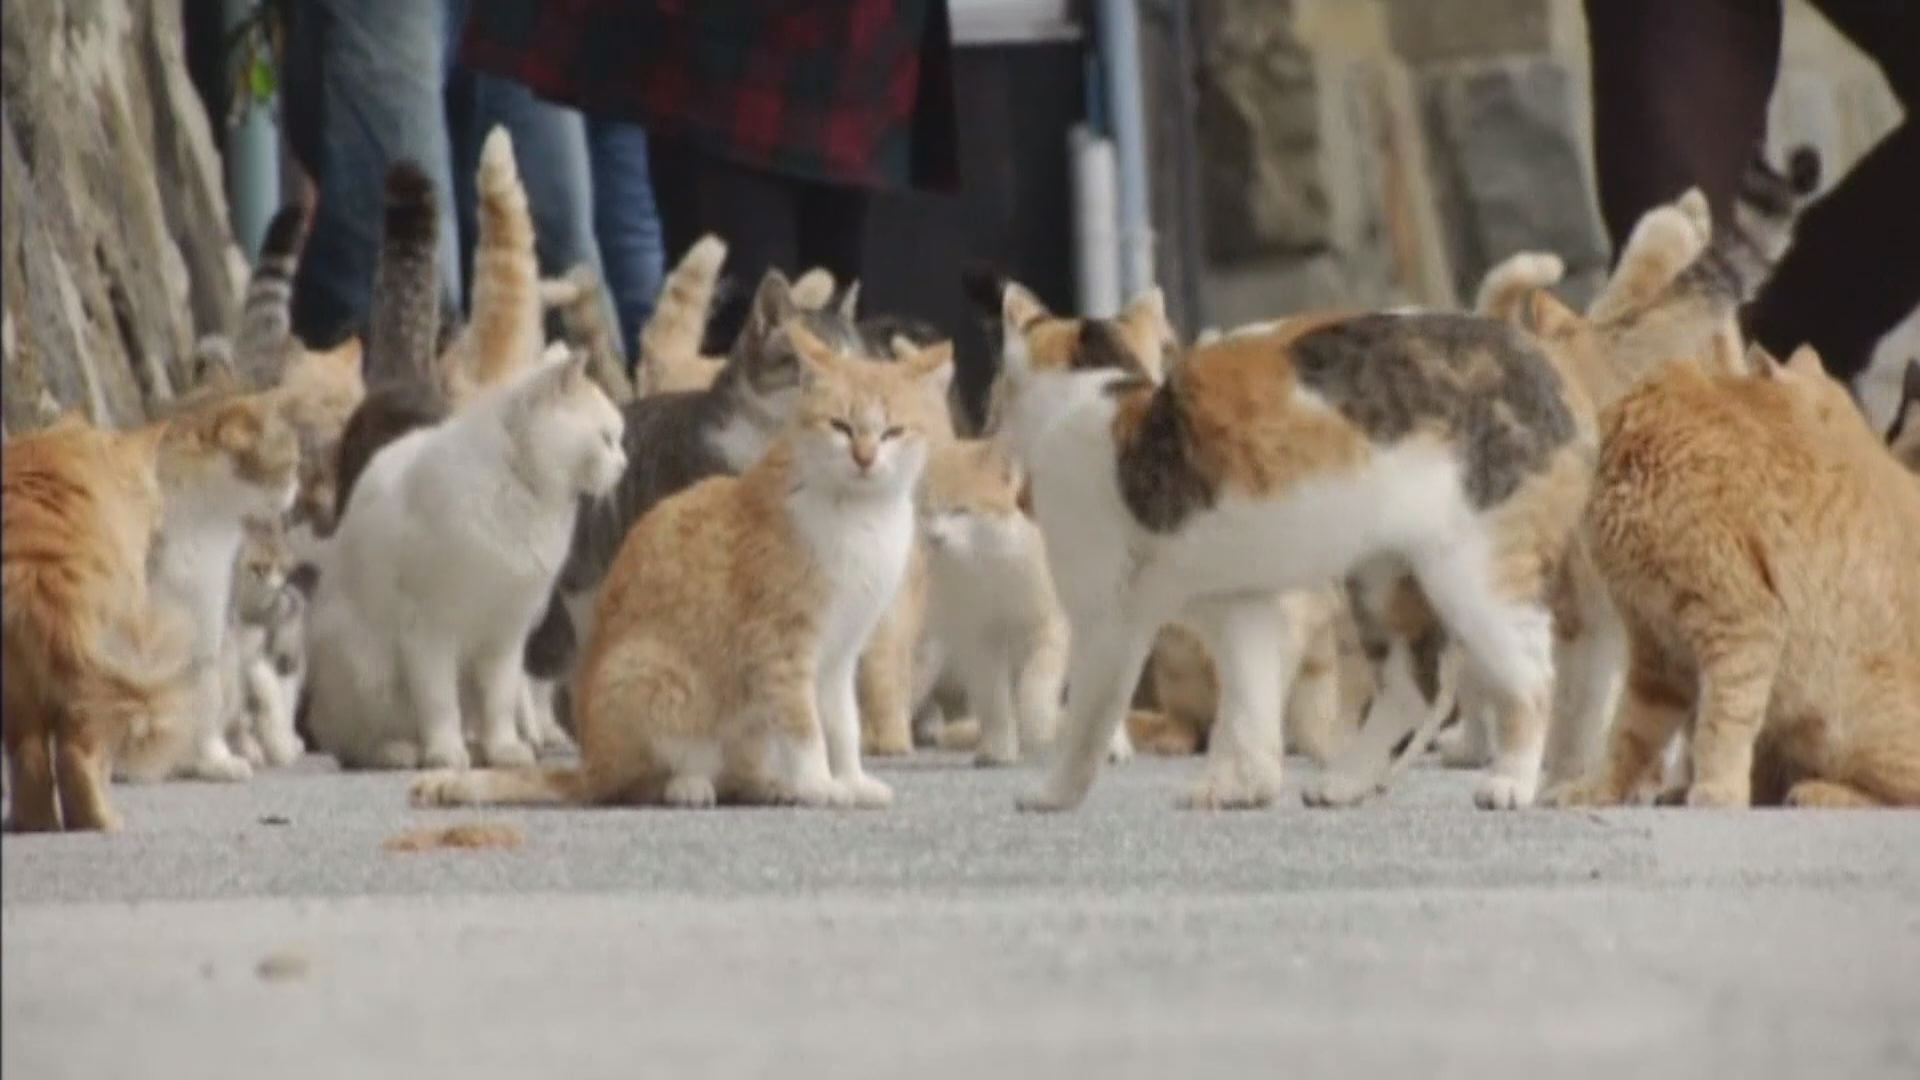 Aoshima: Sleepy Cat Island Where Felines Outnumber Humans